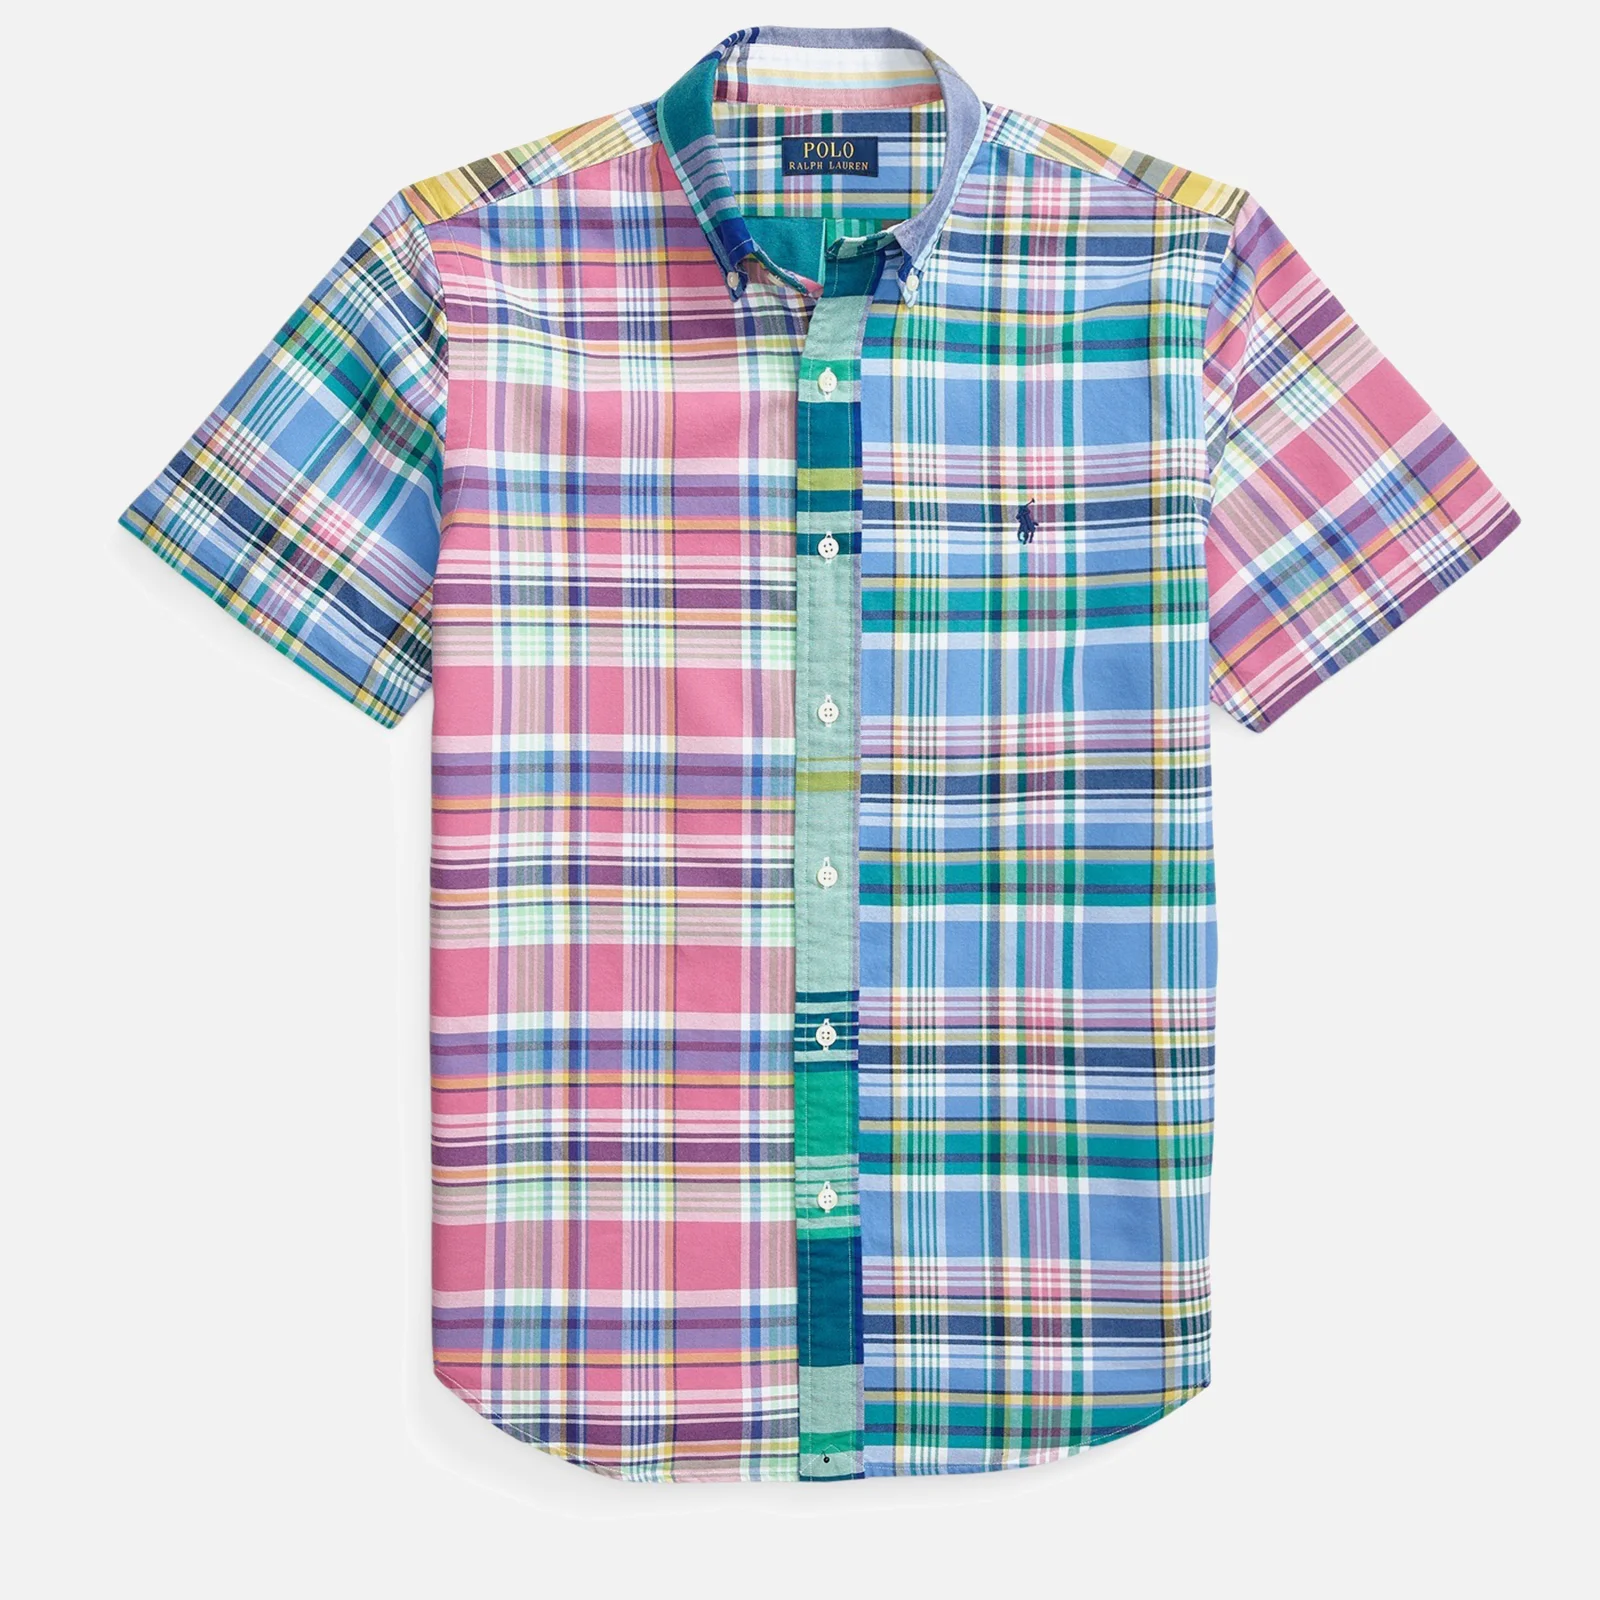 Polo Ralph Lauren Men's Oxford Short Sleeve Shirt - Preppy Multi Funshirt Image 1